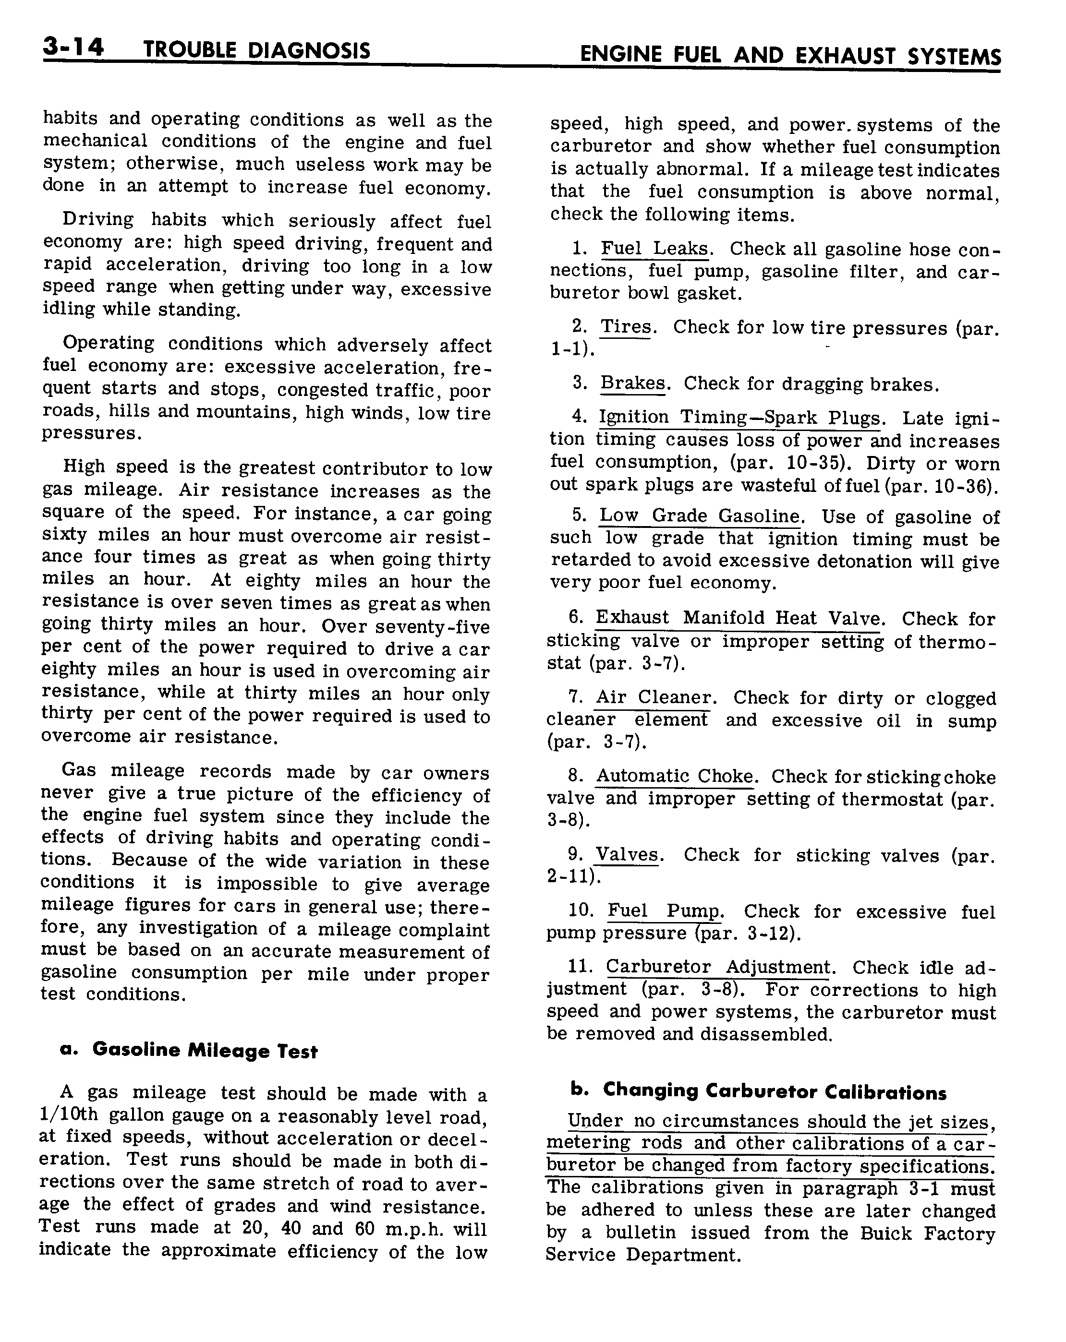 n_04 1961 Buick Shop Manual - Engine Fuel & Exhaust-014-014.jpg